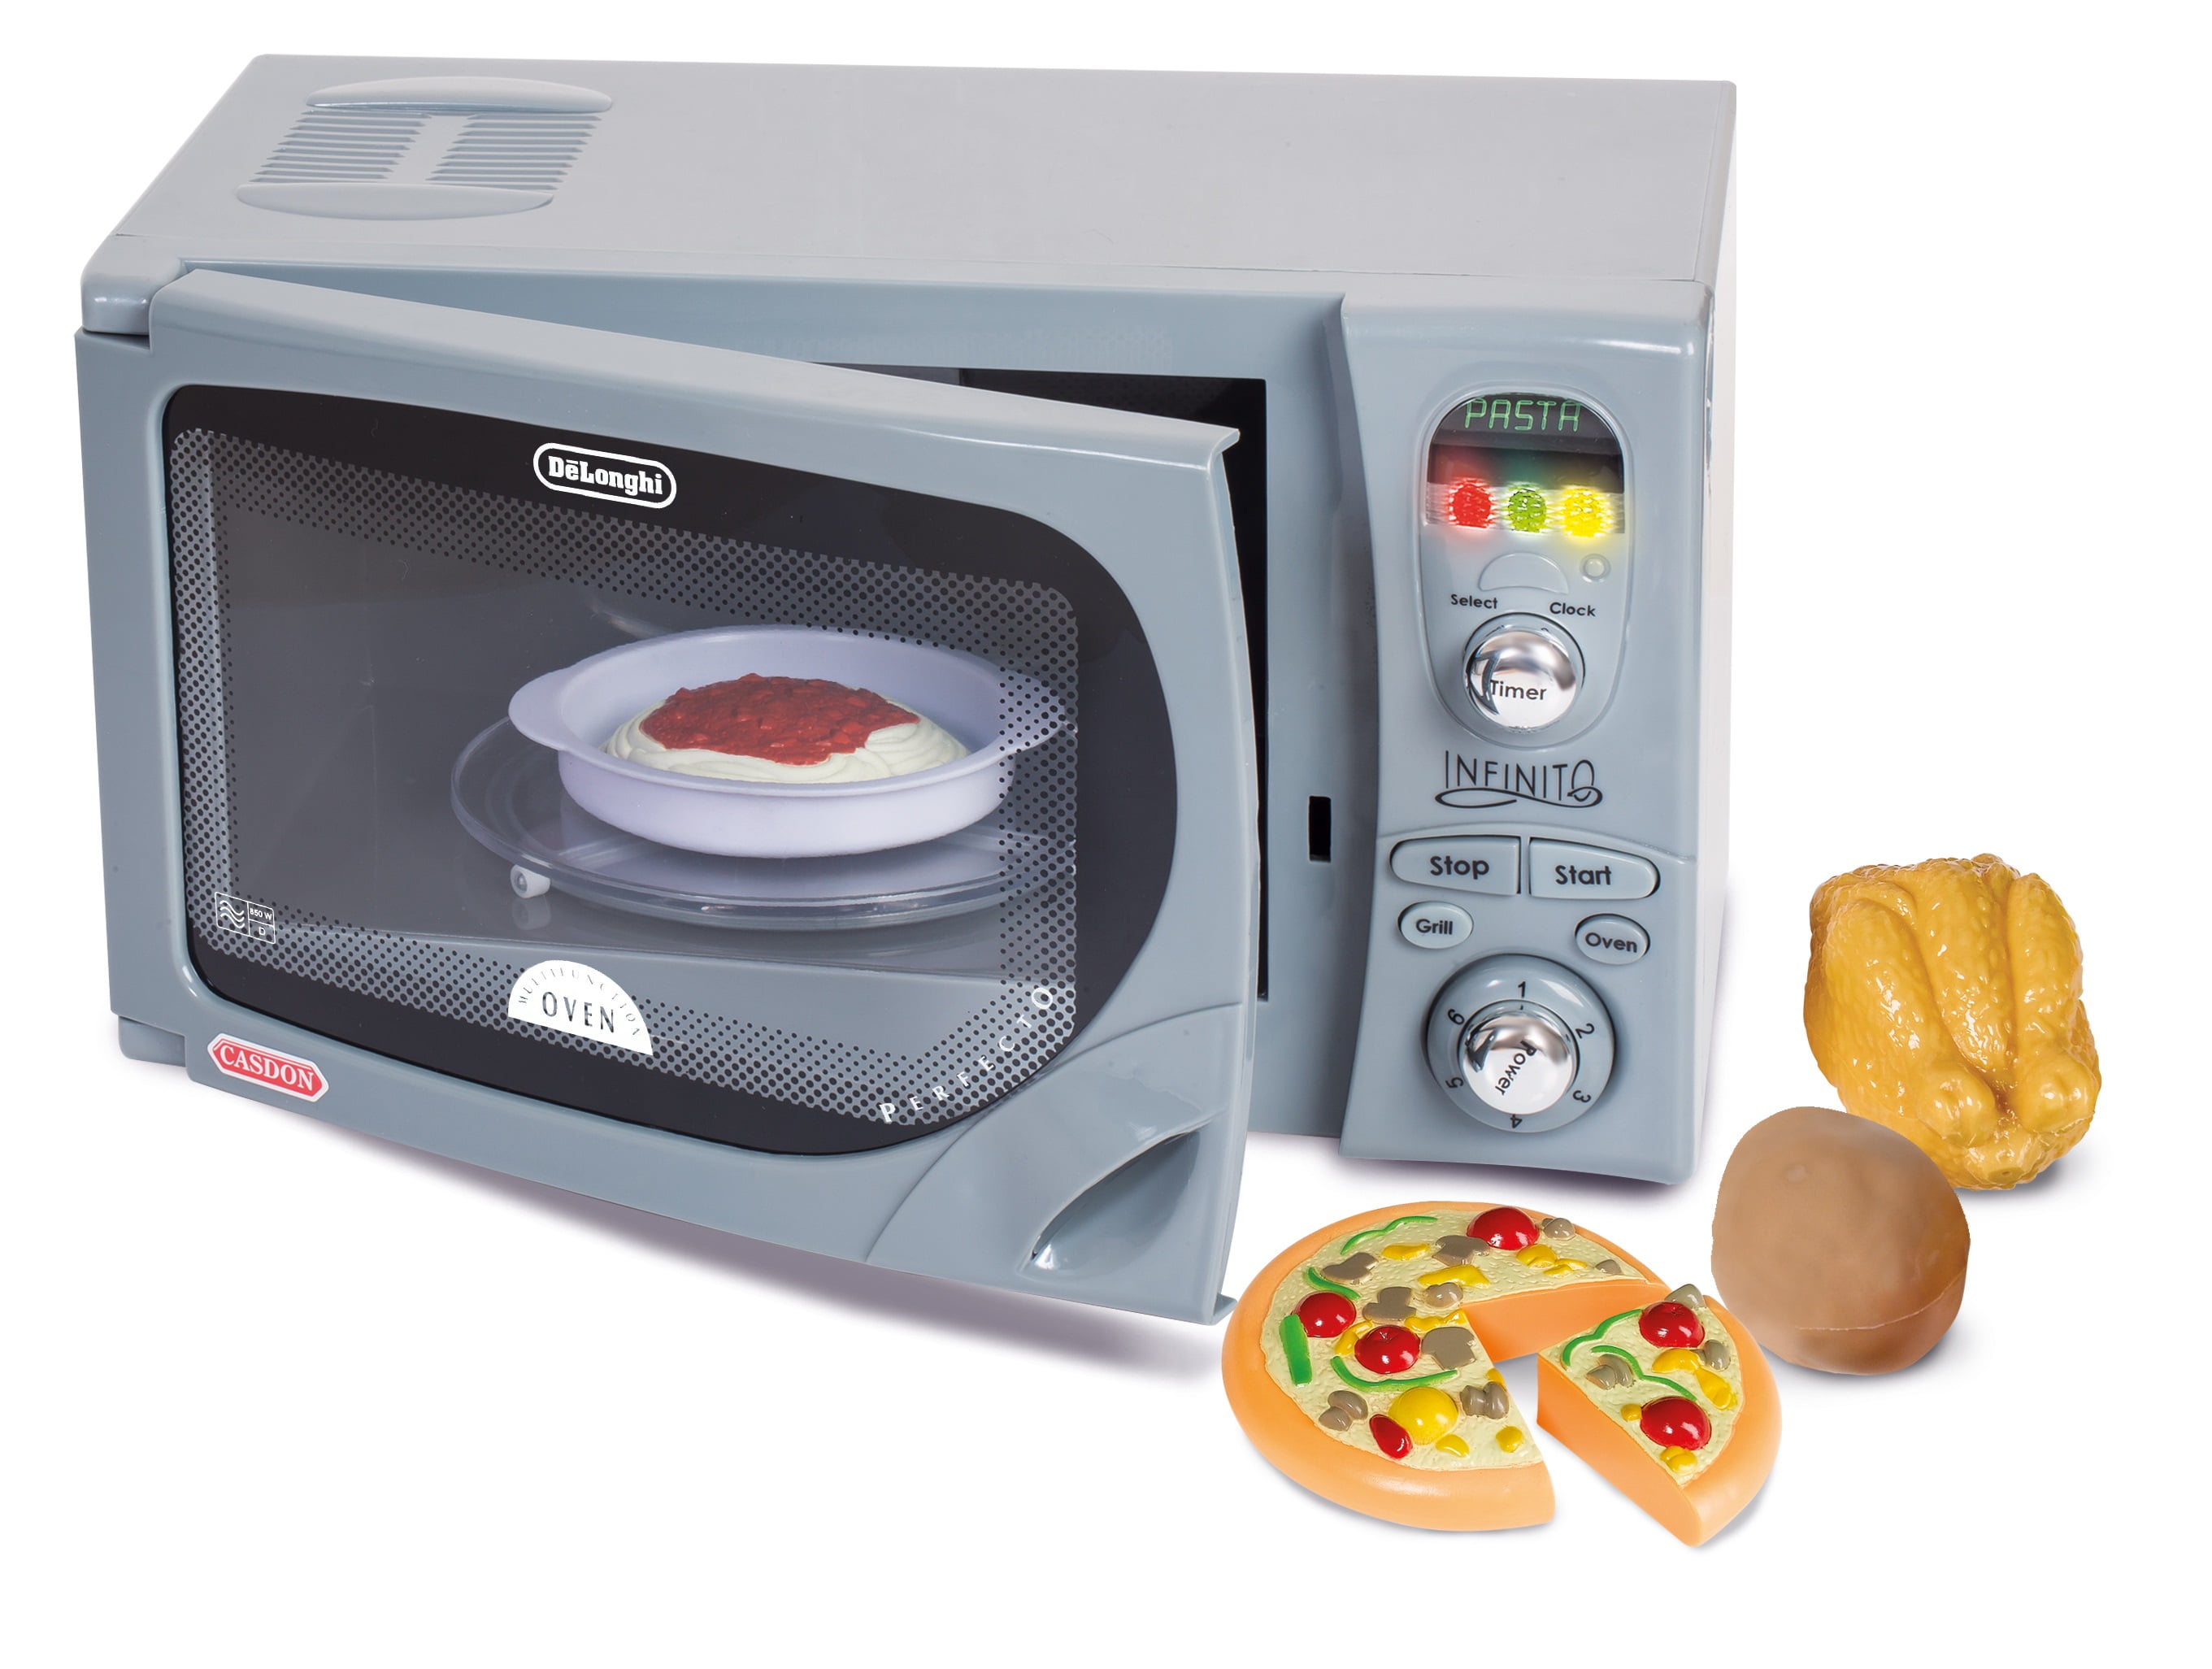  Casdon DeLonghi Microwave. Toy Replica of DeLonghi's